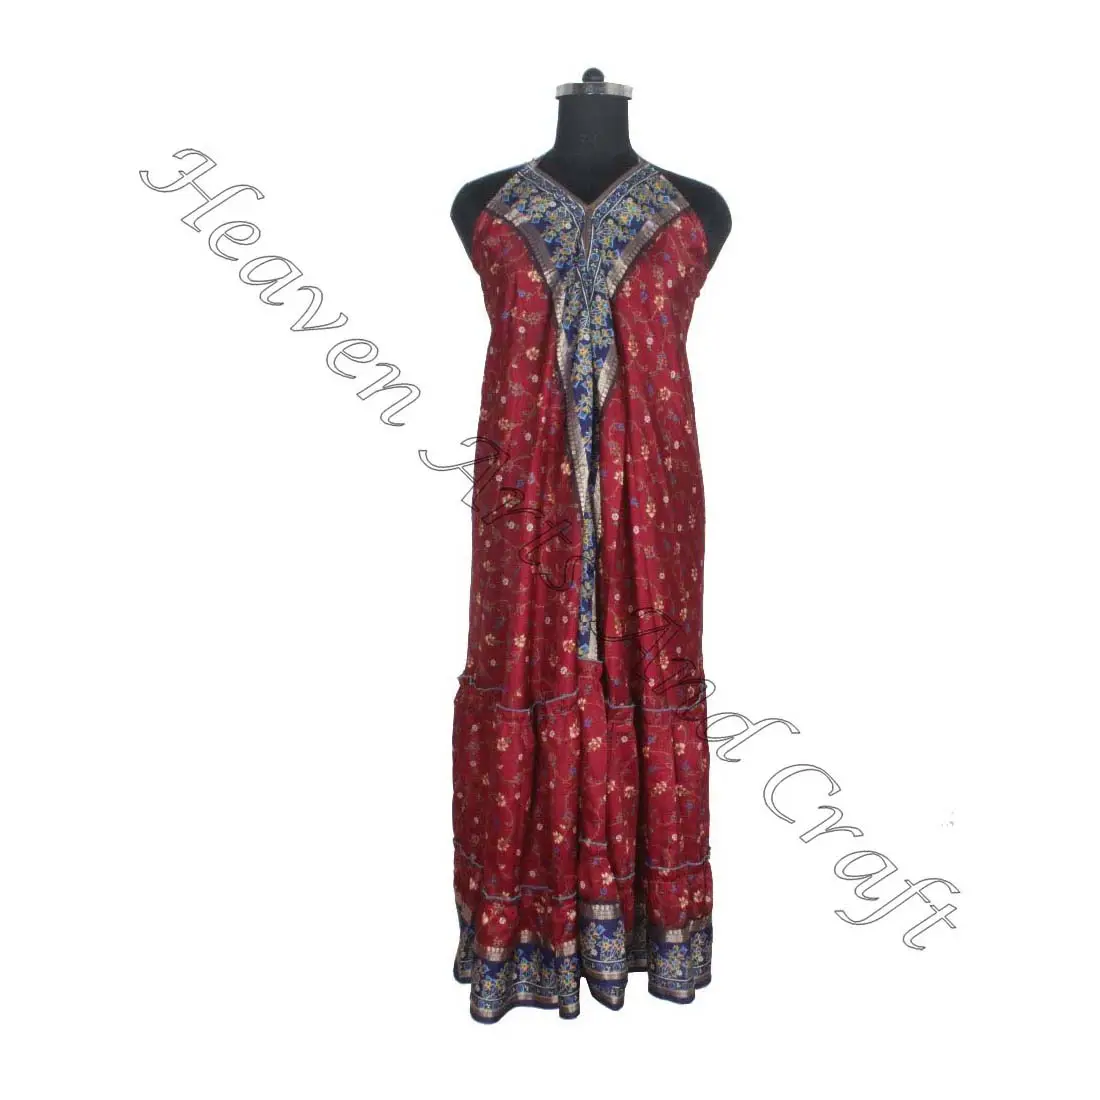 SD018 Saree / Sari / Shari Indian & Pakistani Clothing from India Hippy Boho Latest Traditional Long V-Neck Indian Vintage Sari